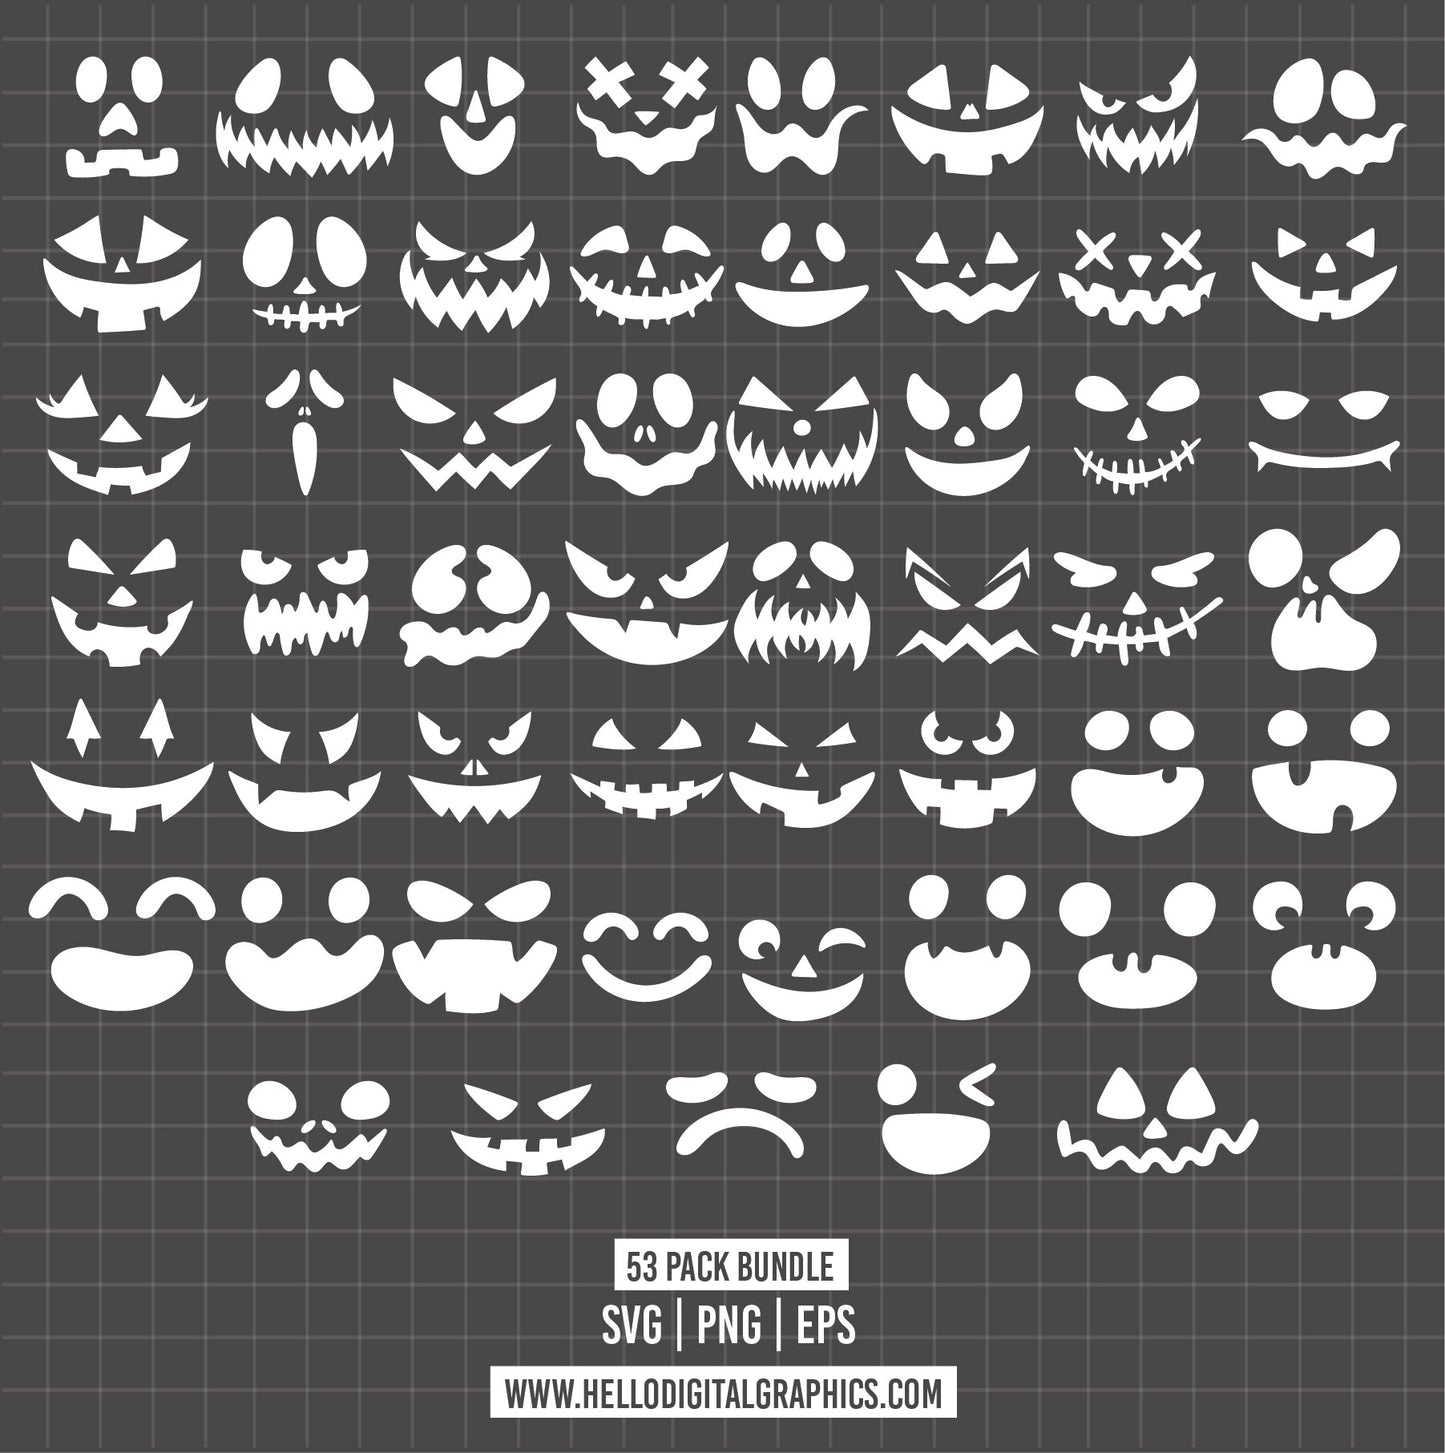 COD1386- Pumpkin Face Svg, Jack O Lantern faces, Halloween pumpkins faces, Pumpkin Faces Clipart, Pumpkin Faces Cut File, Halloween face svg